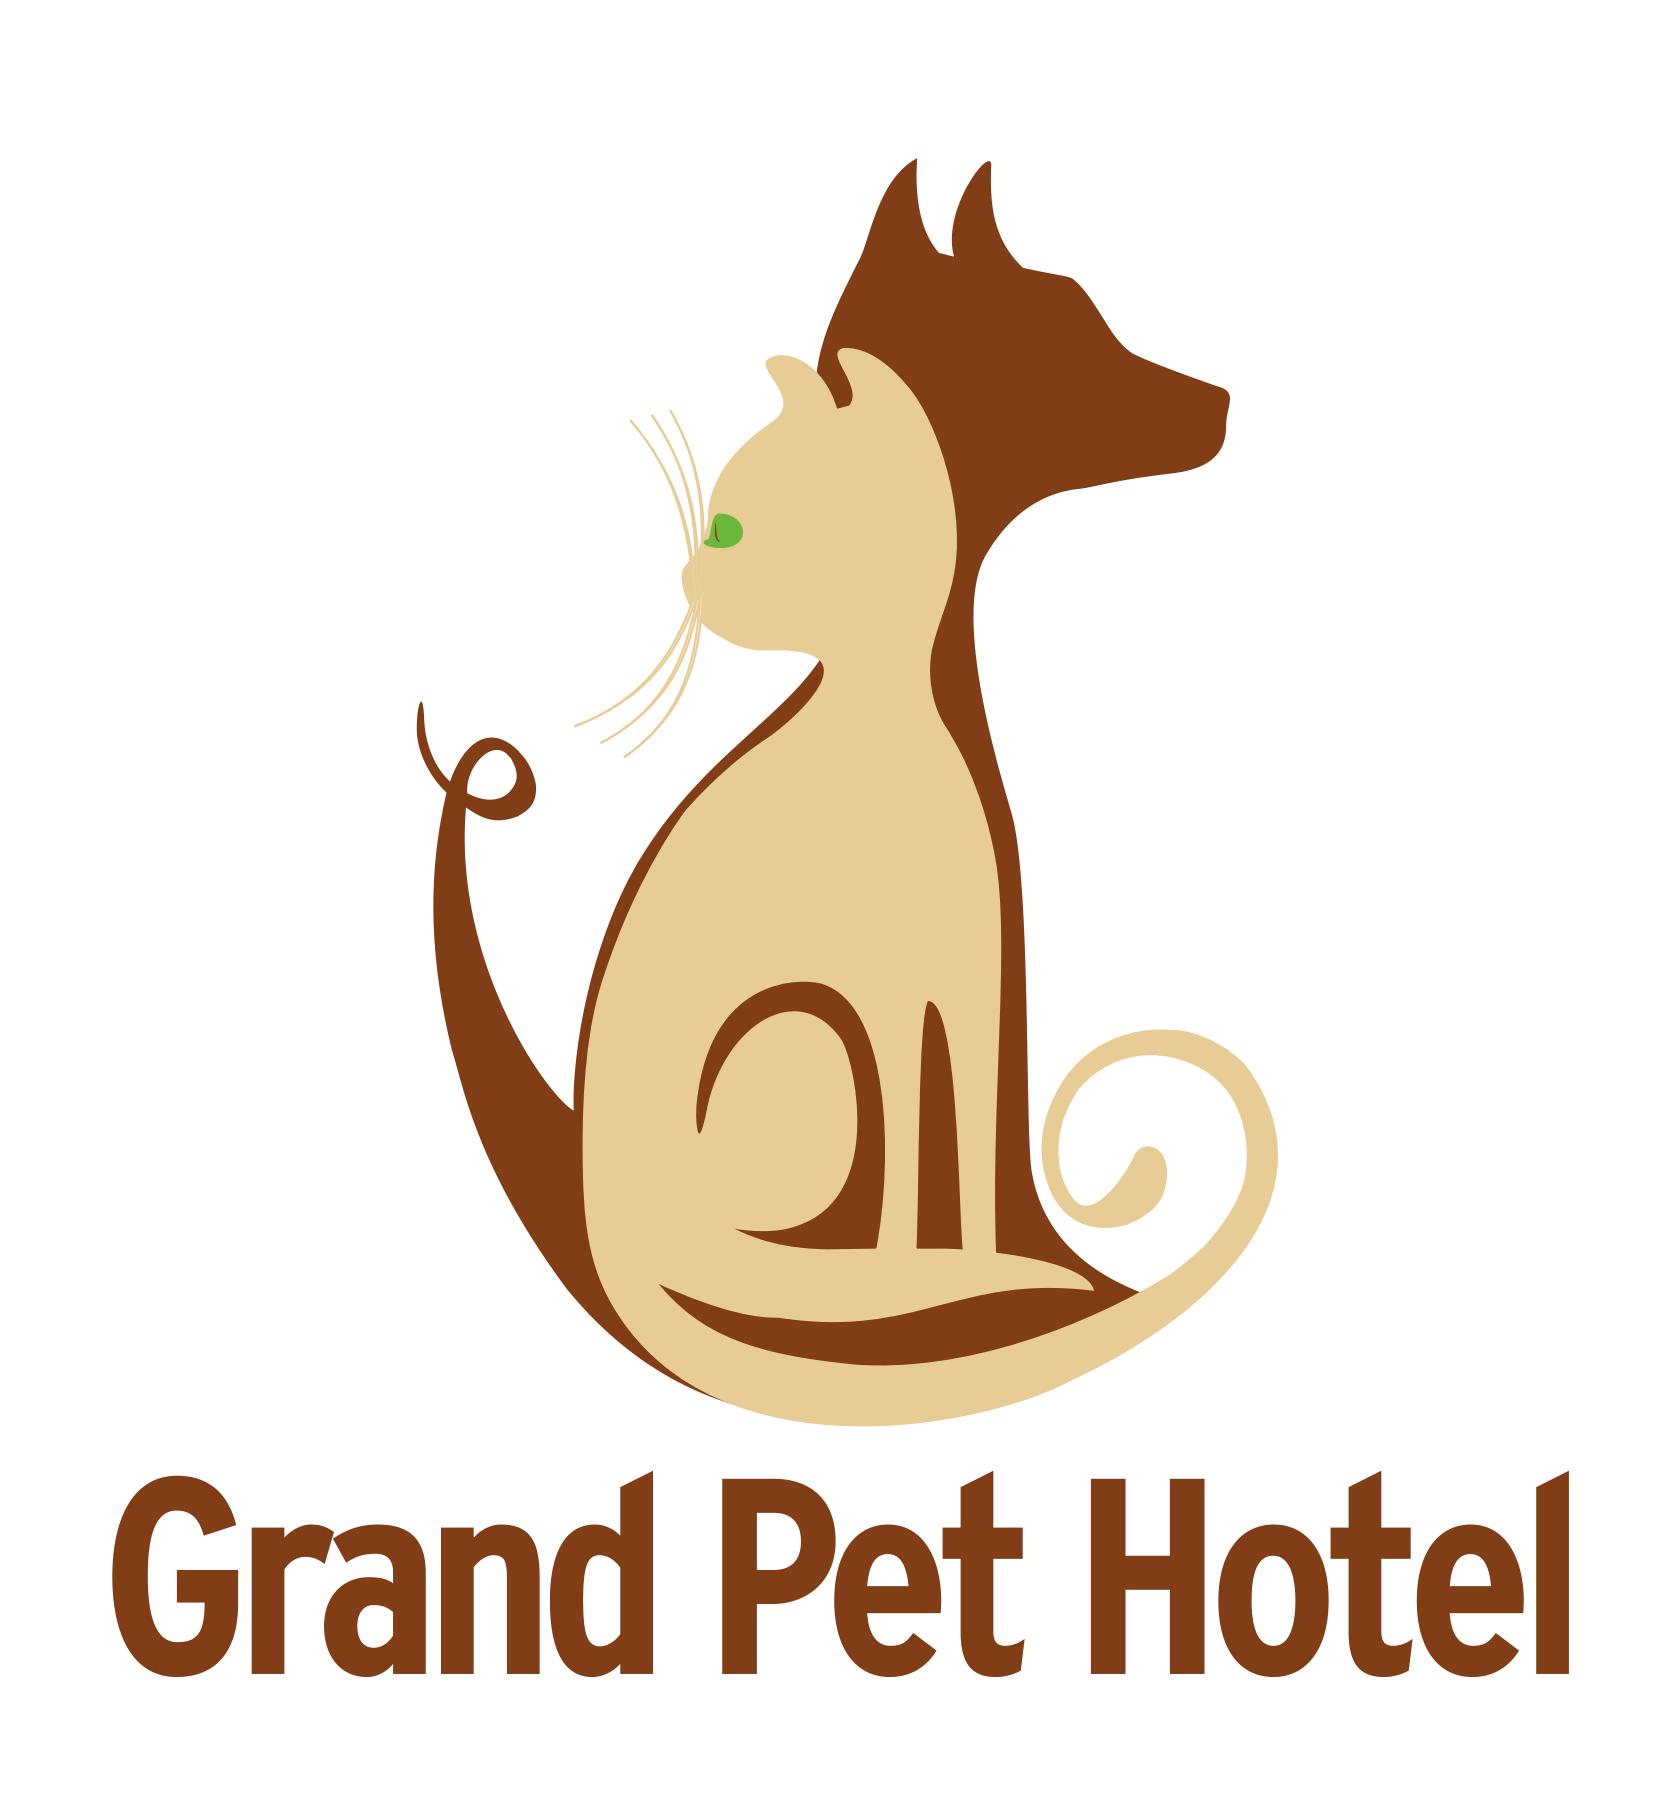 Grand Pet Hotel